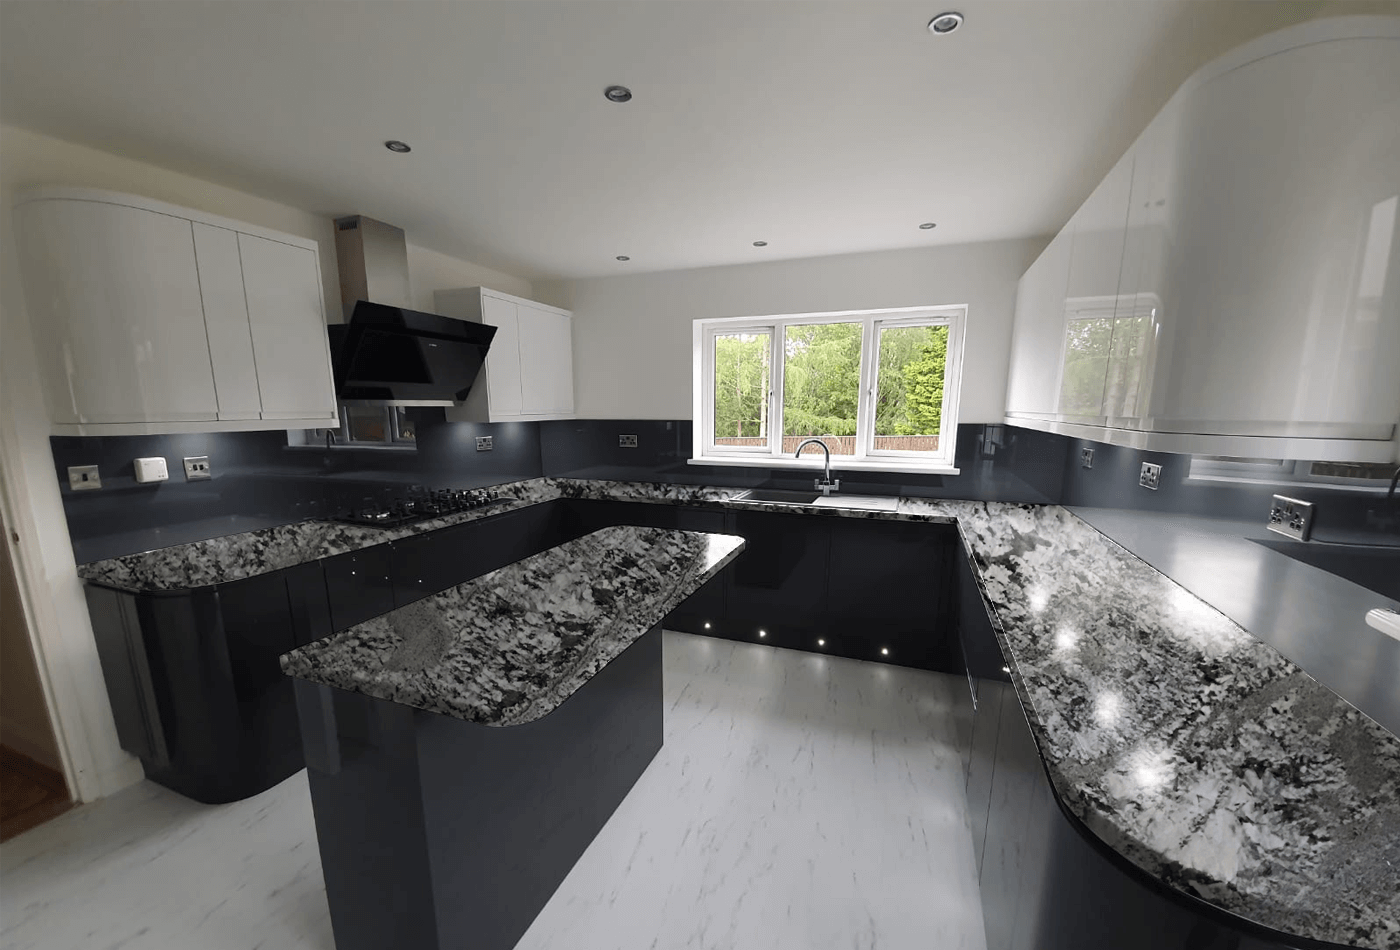 Utilizing Lennon Granite Kitchen at Your Residence